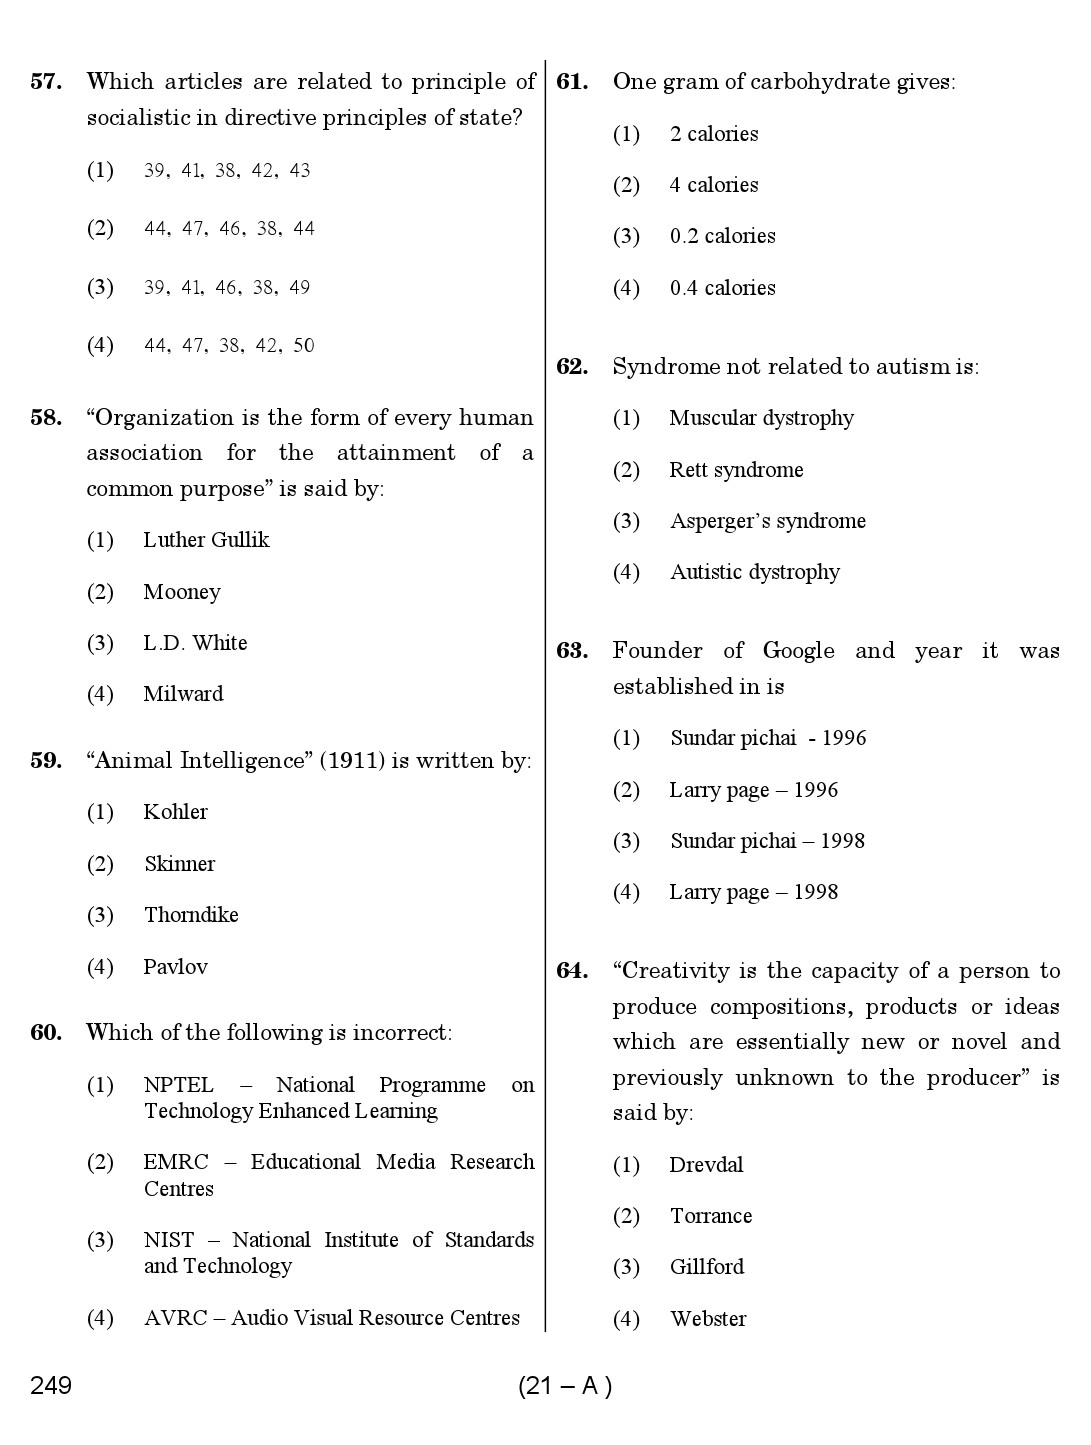 Karnataka PSC Principal Exam Sample Question Paper Subject code 249 21